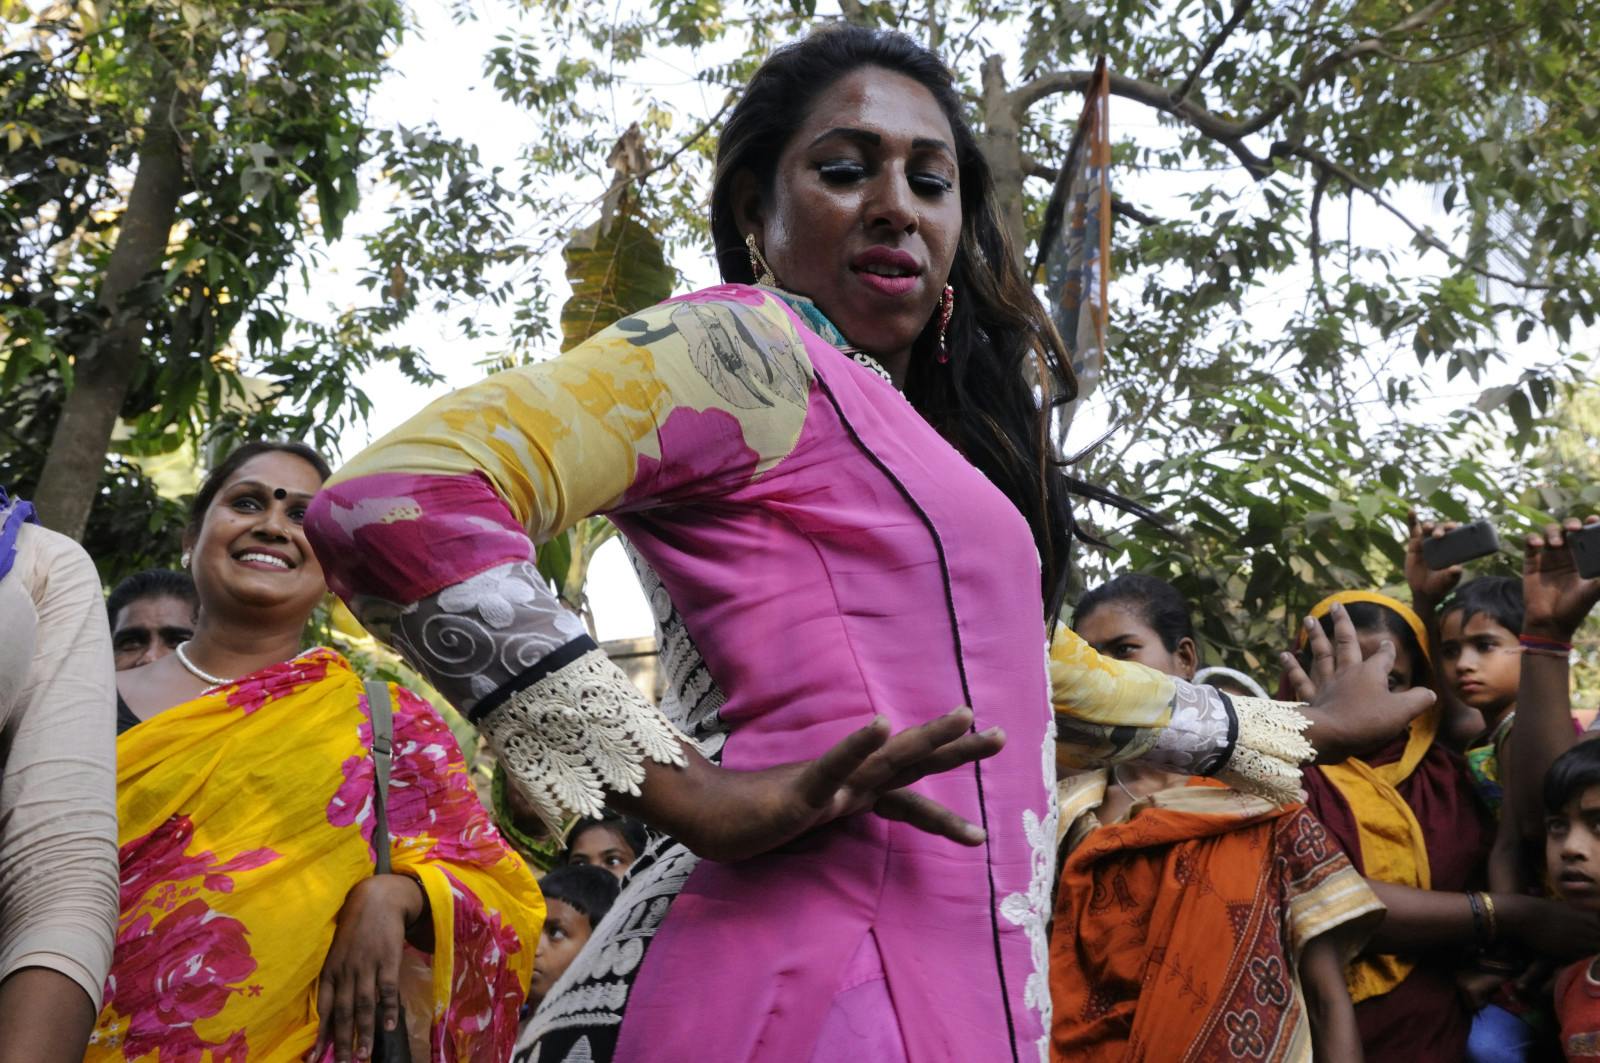 Hijra near Kolkata on March 21, 2015 to offer their prayers (NurPhoto/NurPhoto via Getty Images)